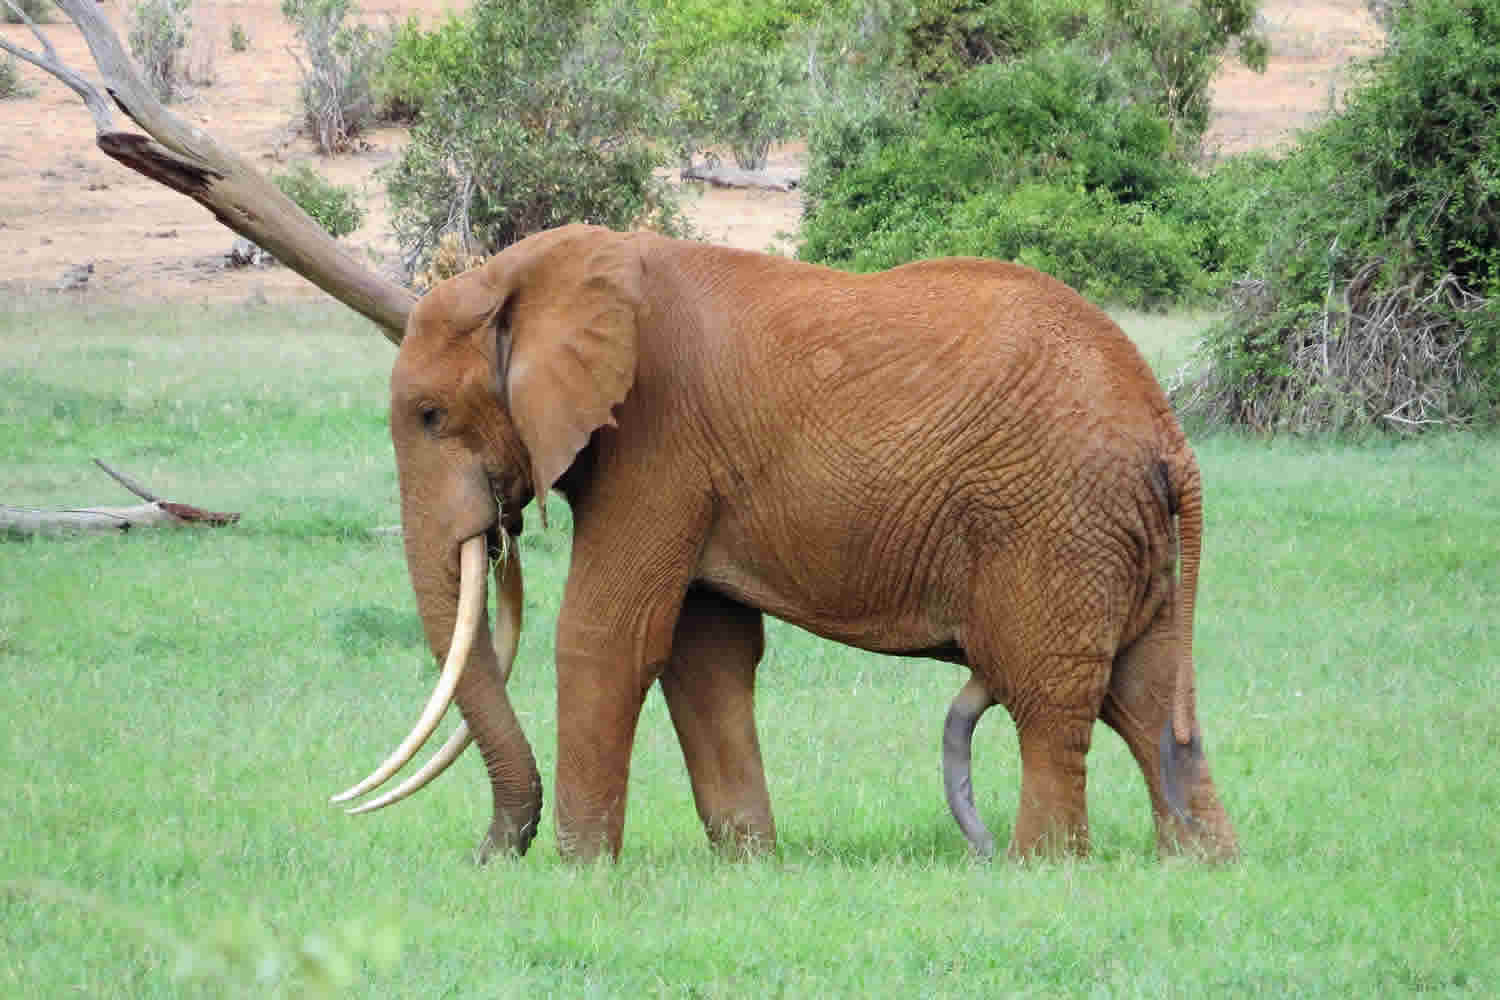 Incredulous Elephant